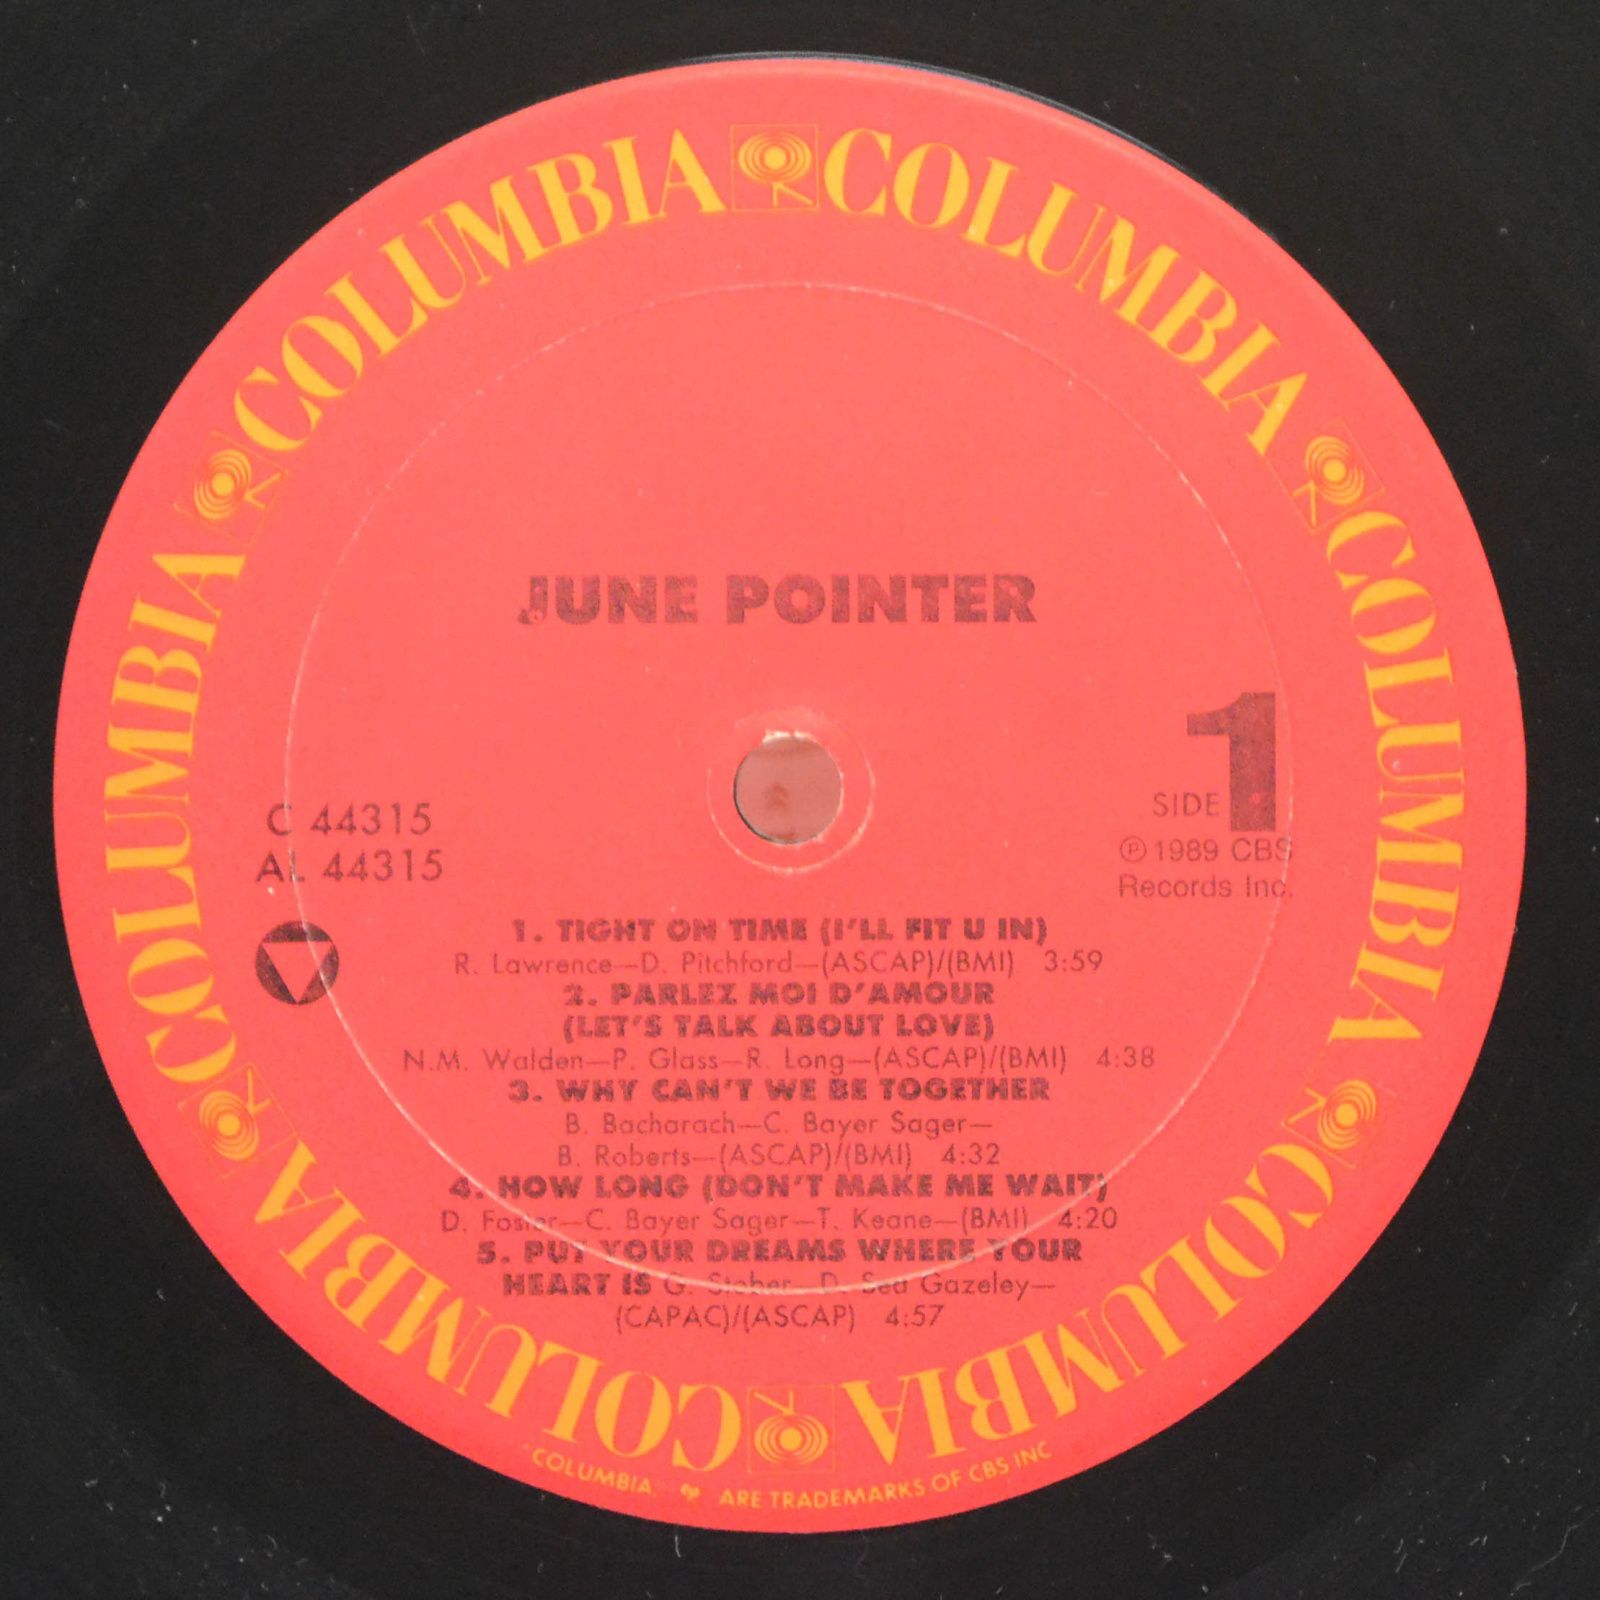 June Pointer — June Pointer, 1989